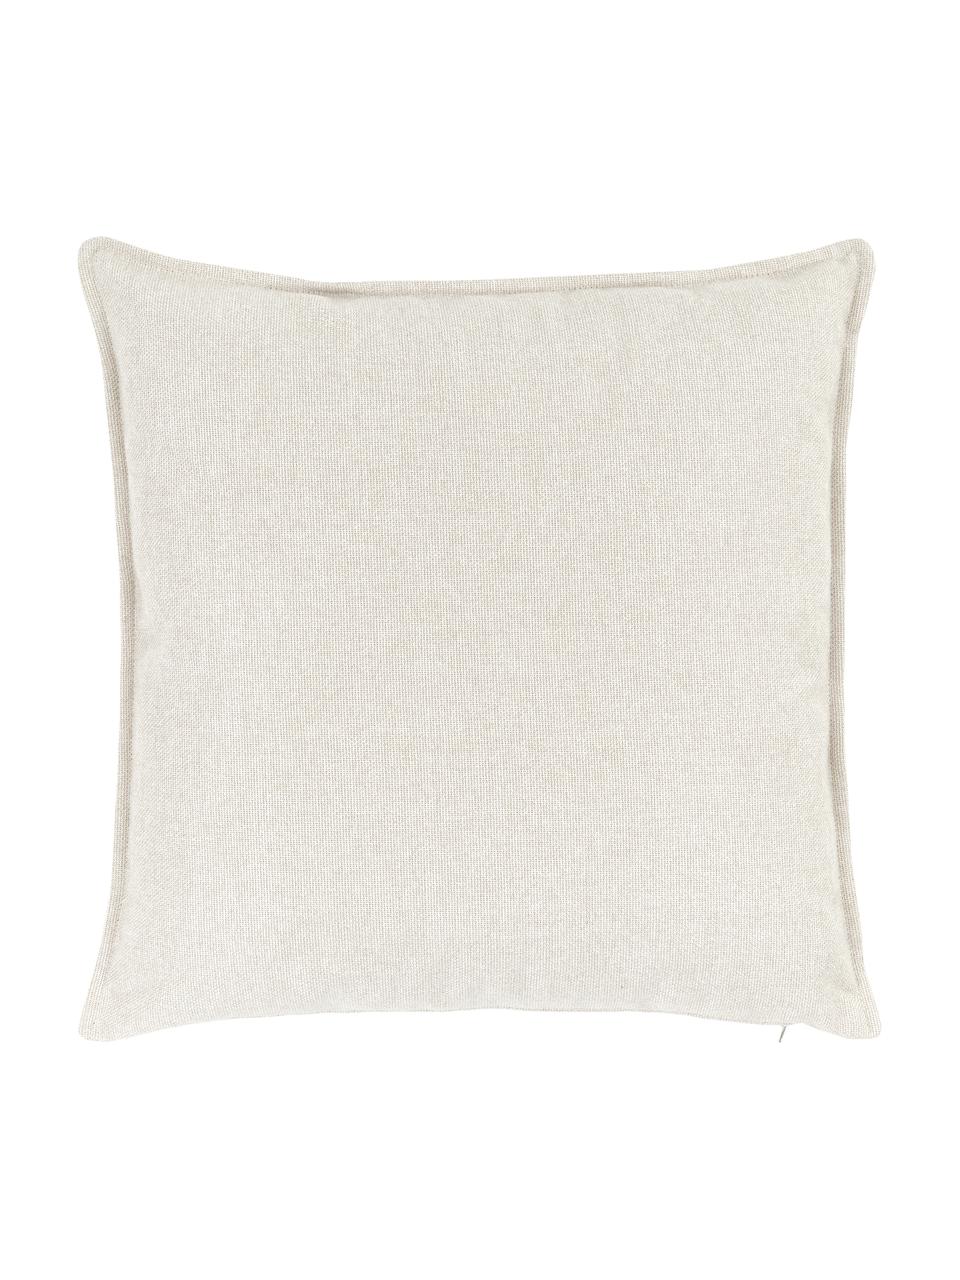 Sofa-Kissen Lennon in Beige, Bezug: 100% Polyester, Beige, B 60 x L 60 cm